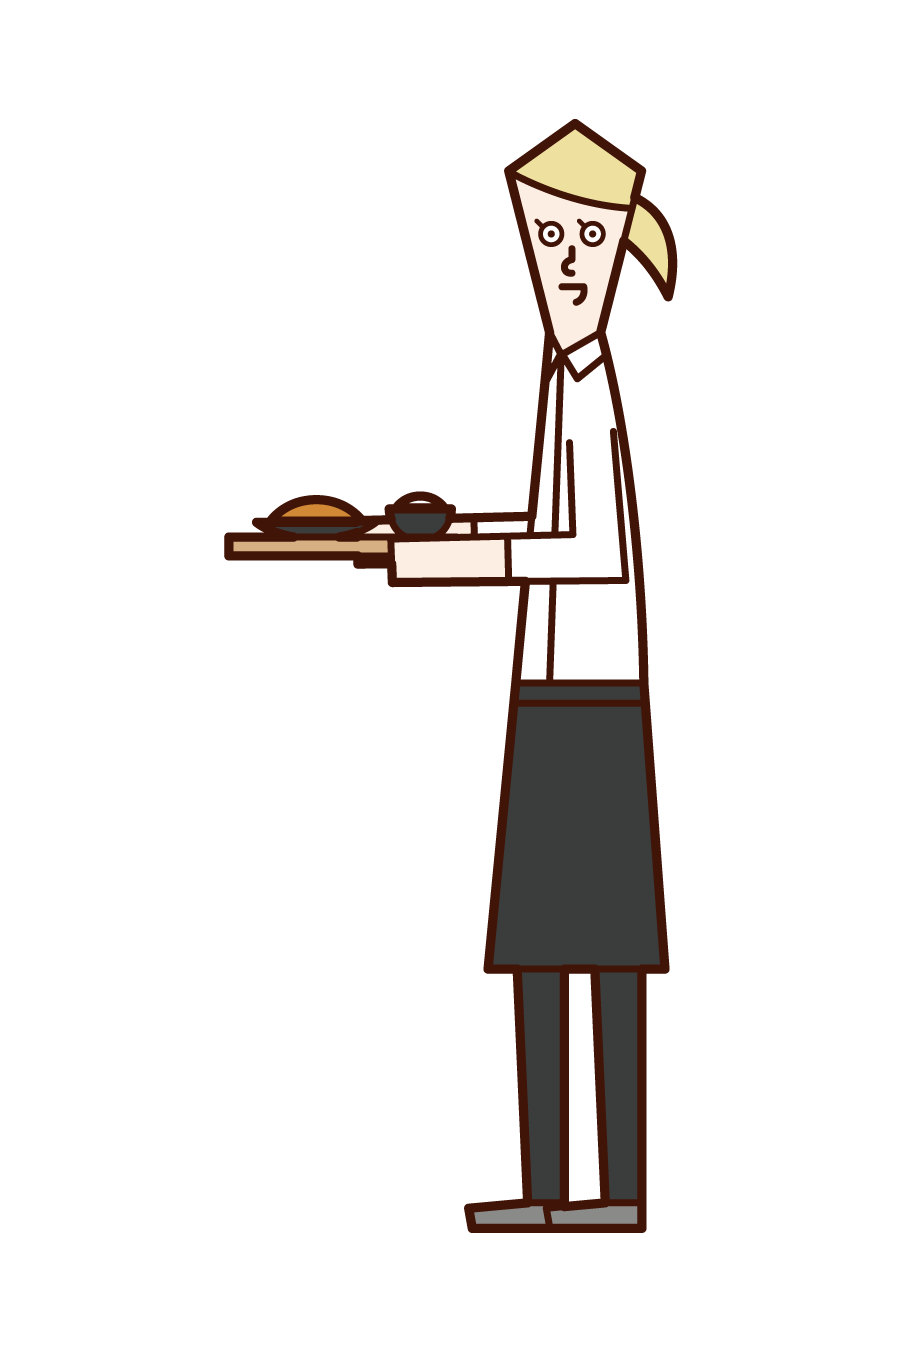 Illustration of a clerk (woman) at a restaurant or café